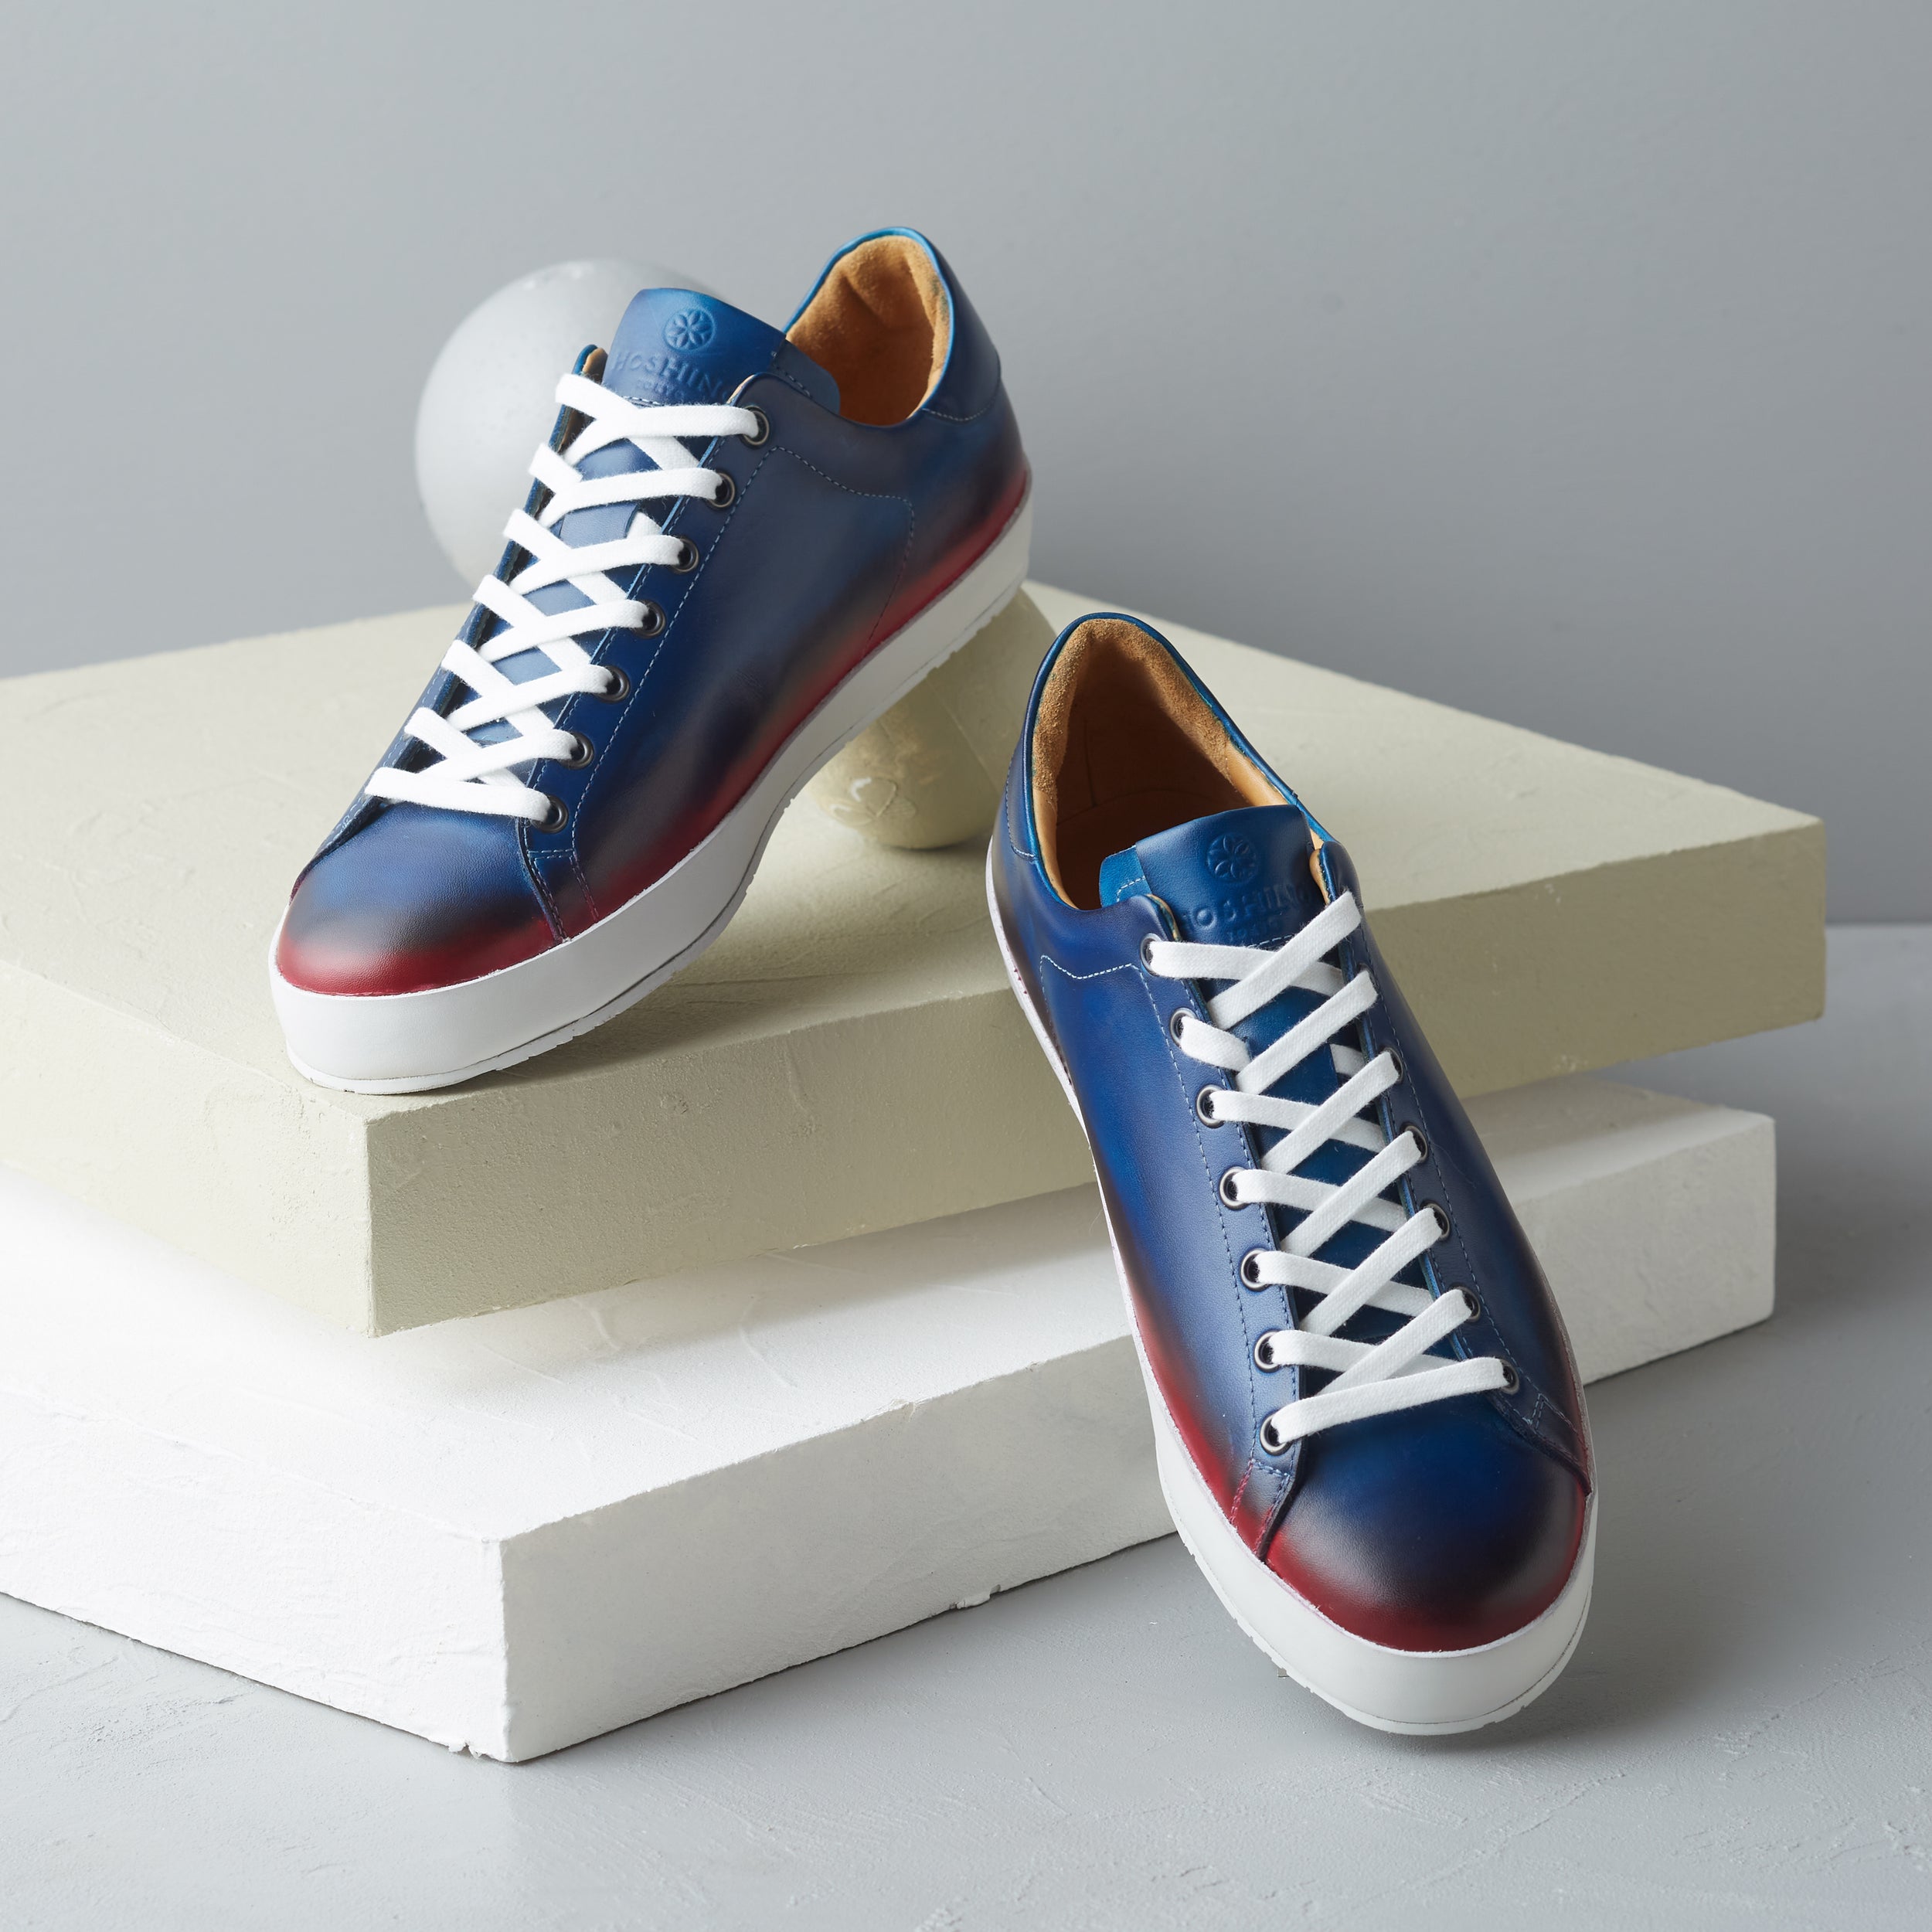 [women's] Liberte - low-top sneakers - red x blue patina calfskin